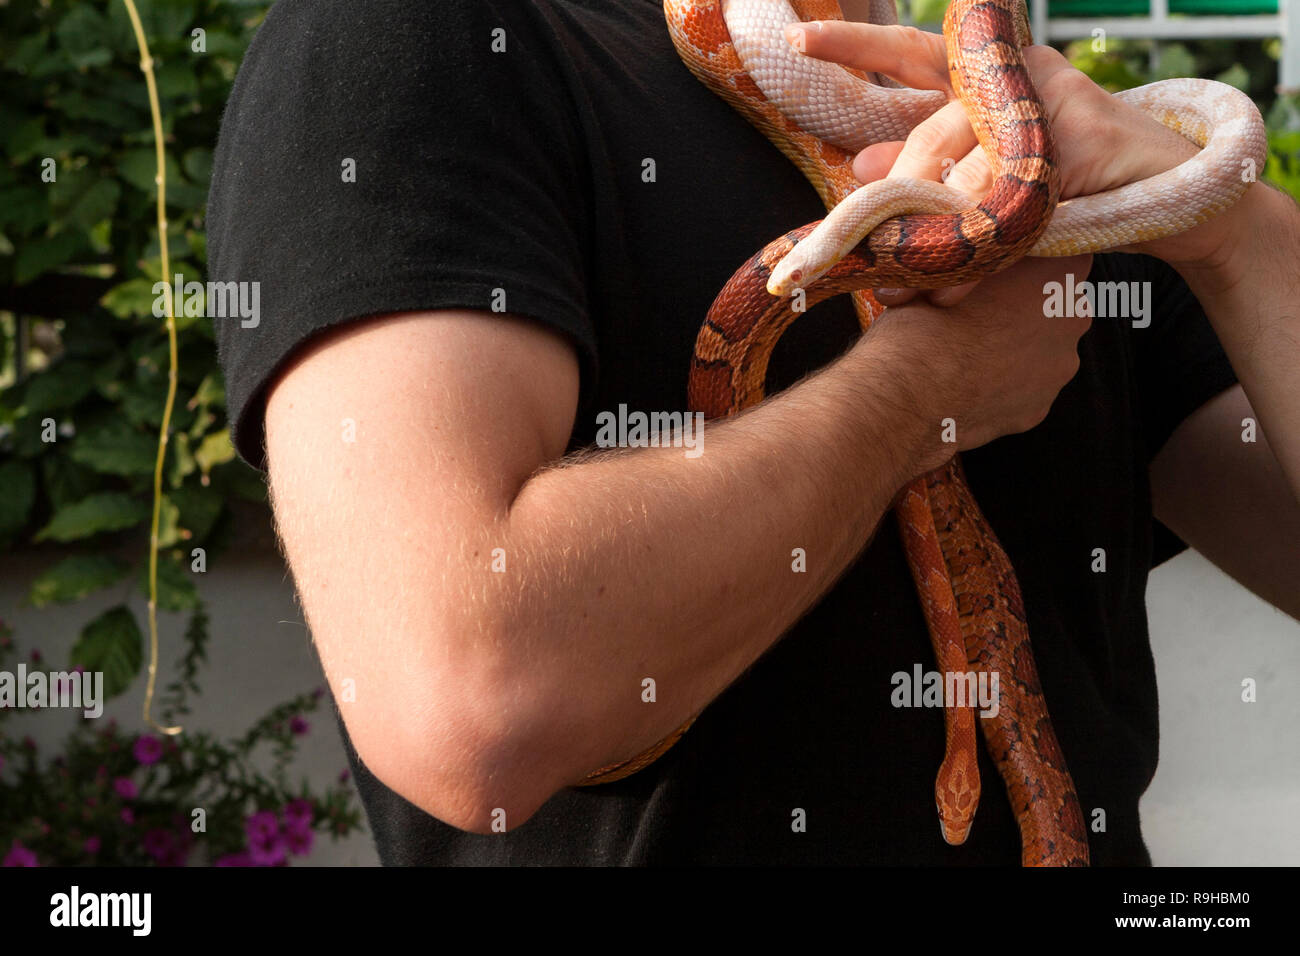 A man holding many corn snakes (Pantherophis guttatus) Stock Photo